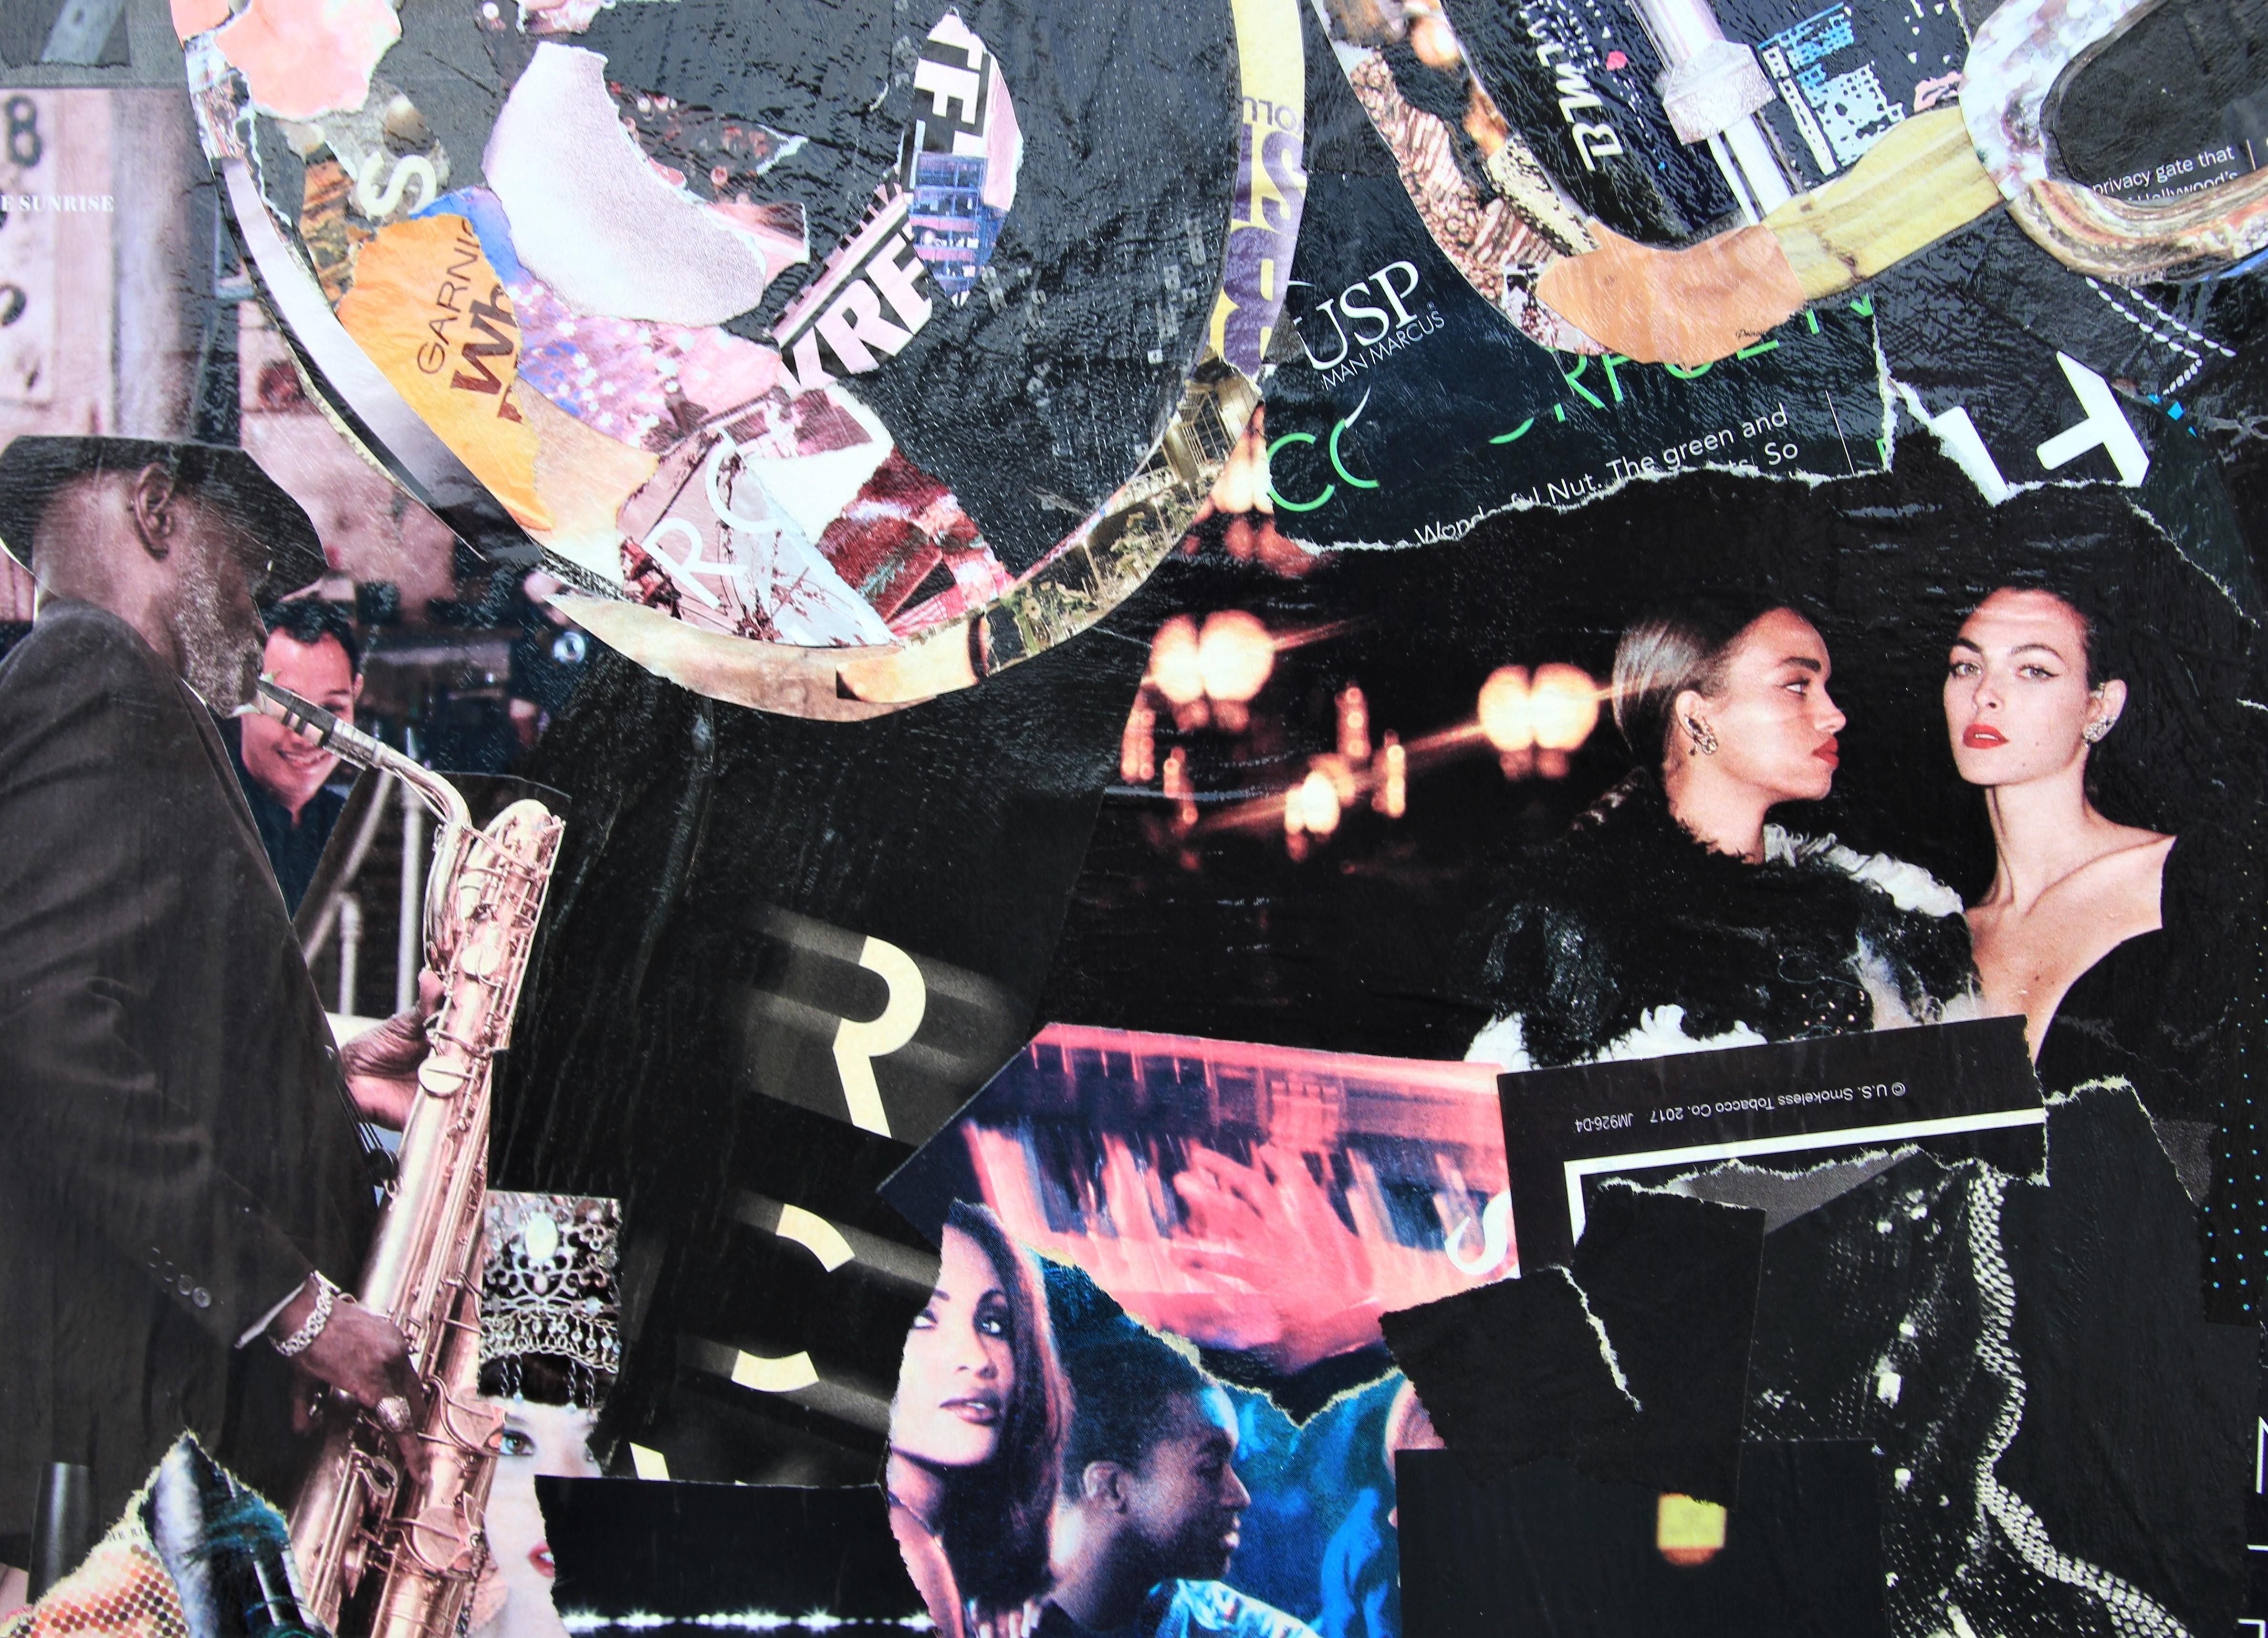 “Lee Morgan Jazz” Blue, Black, and Gray Pop Art Mixed Media Collage Portrait 1